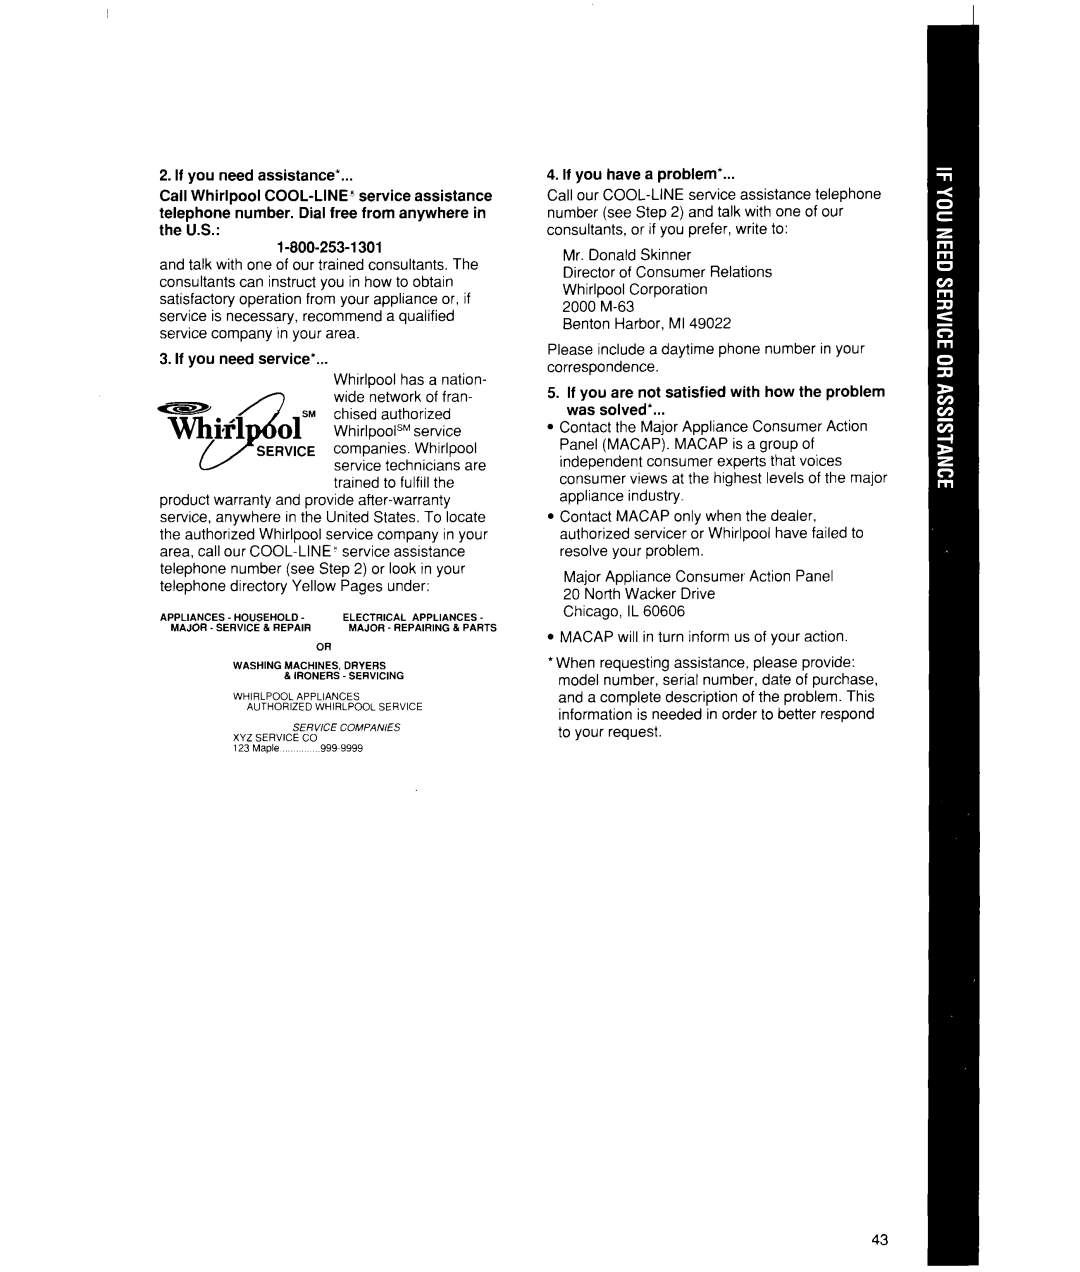 Whirlpool MW7500XW manual If you need assistance’ 